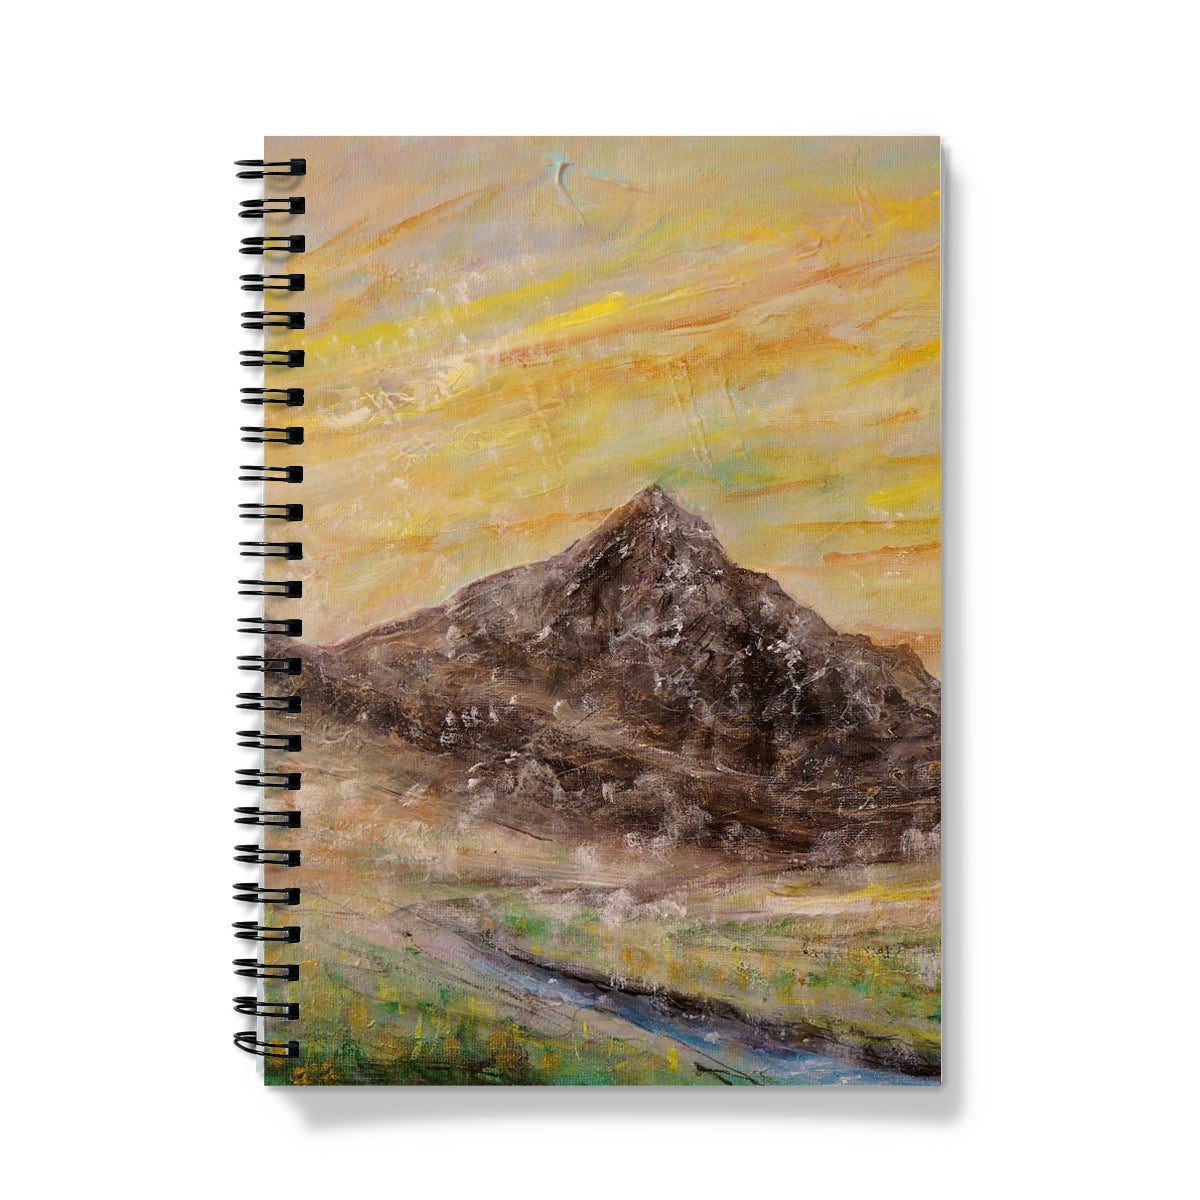 Glen Rosa Mist Arran Art Gifts Notebook-Journals & Notebooks-Arran Art Gallery-A4-Lined-Paintings, Prints, Homeware, Art Gifts From Scotland By Scottish Artist Kevin Hunter